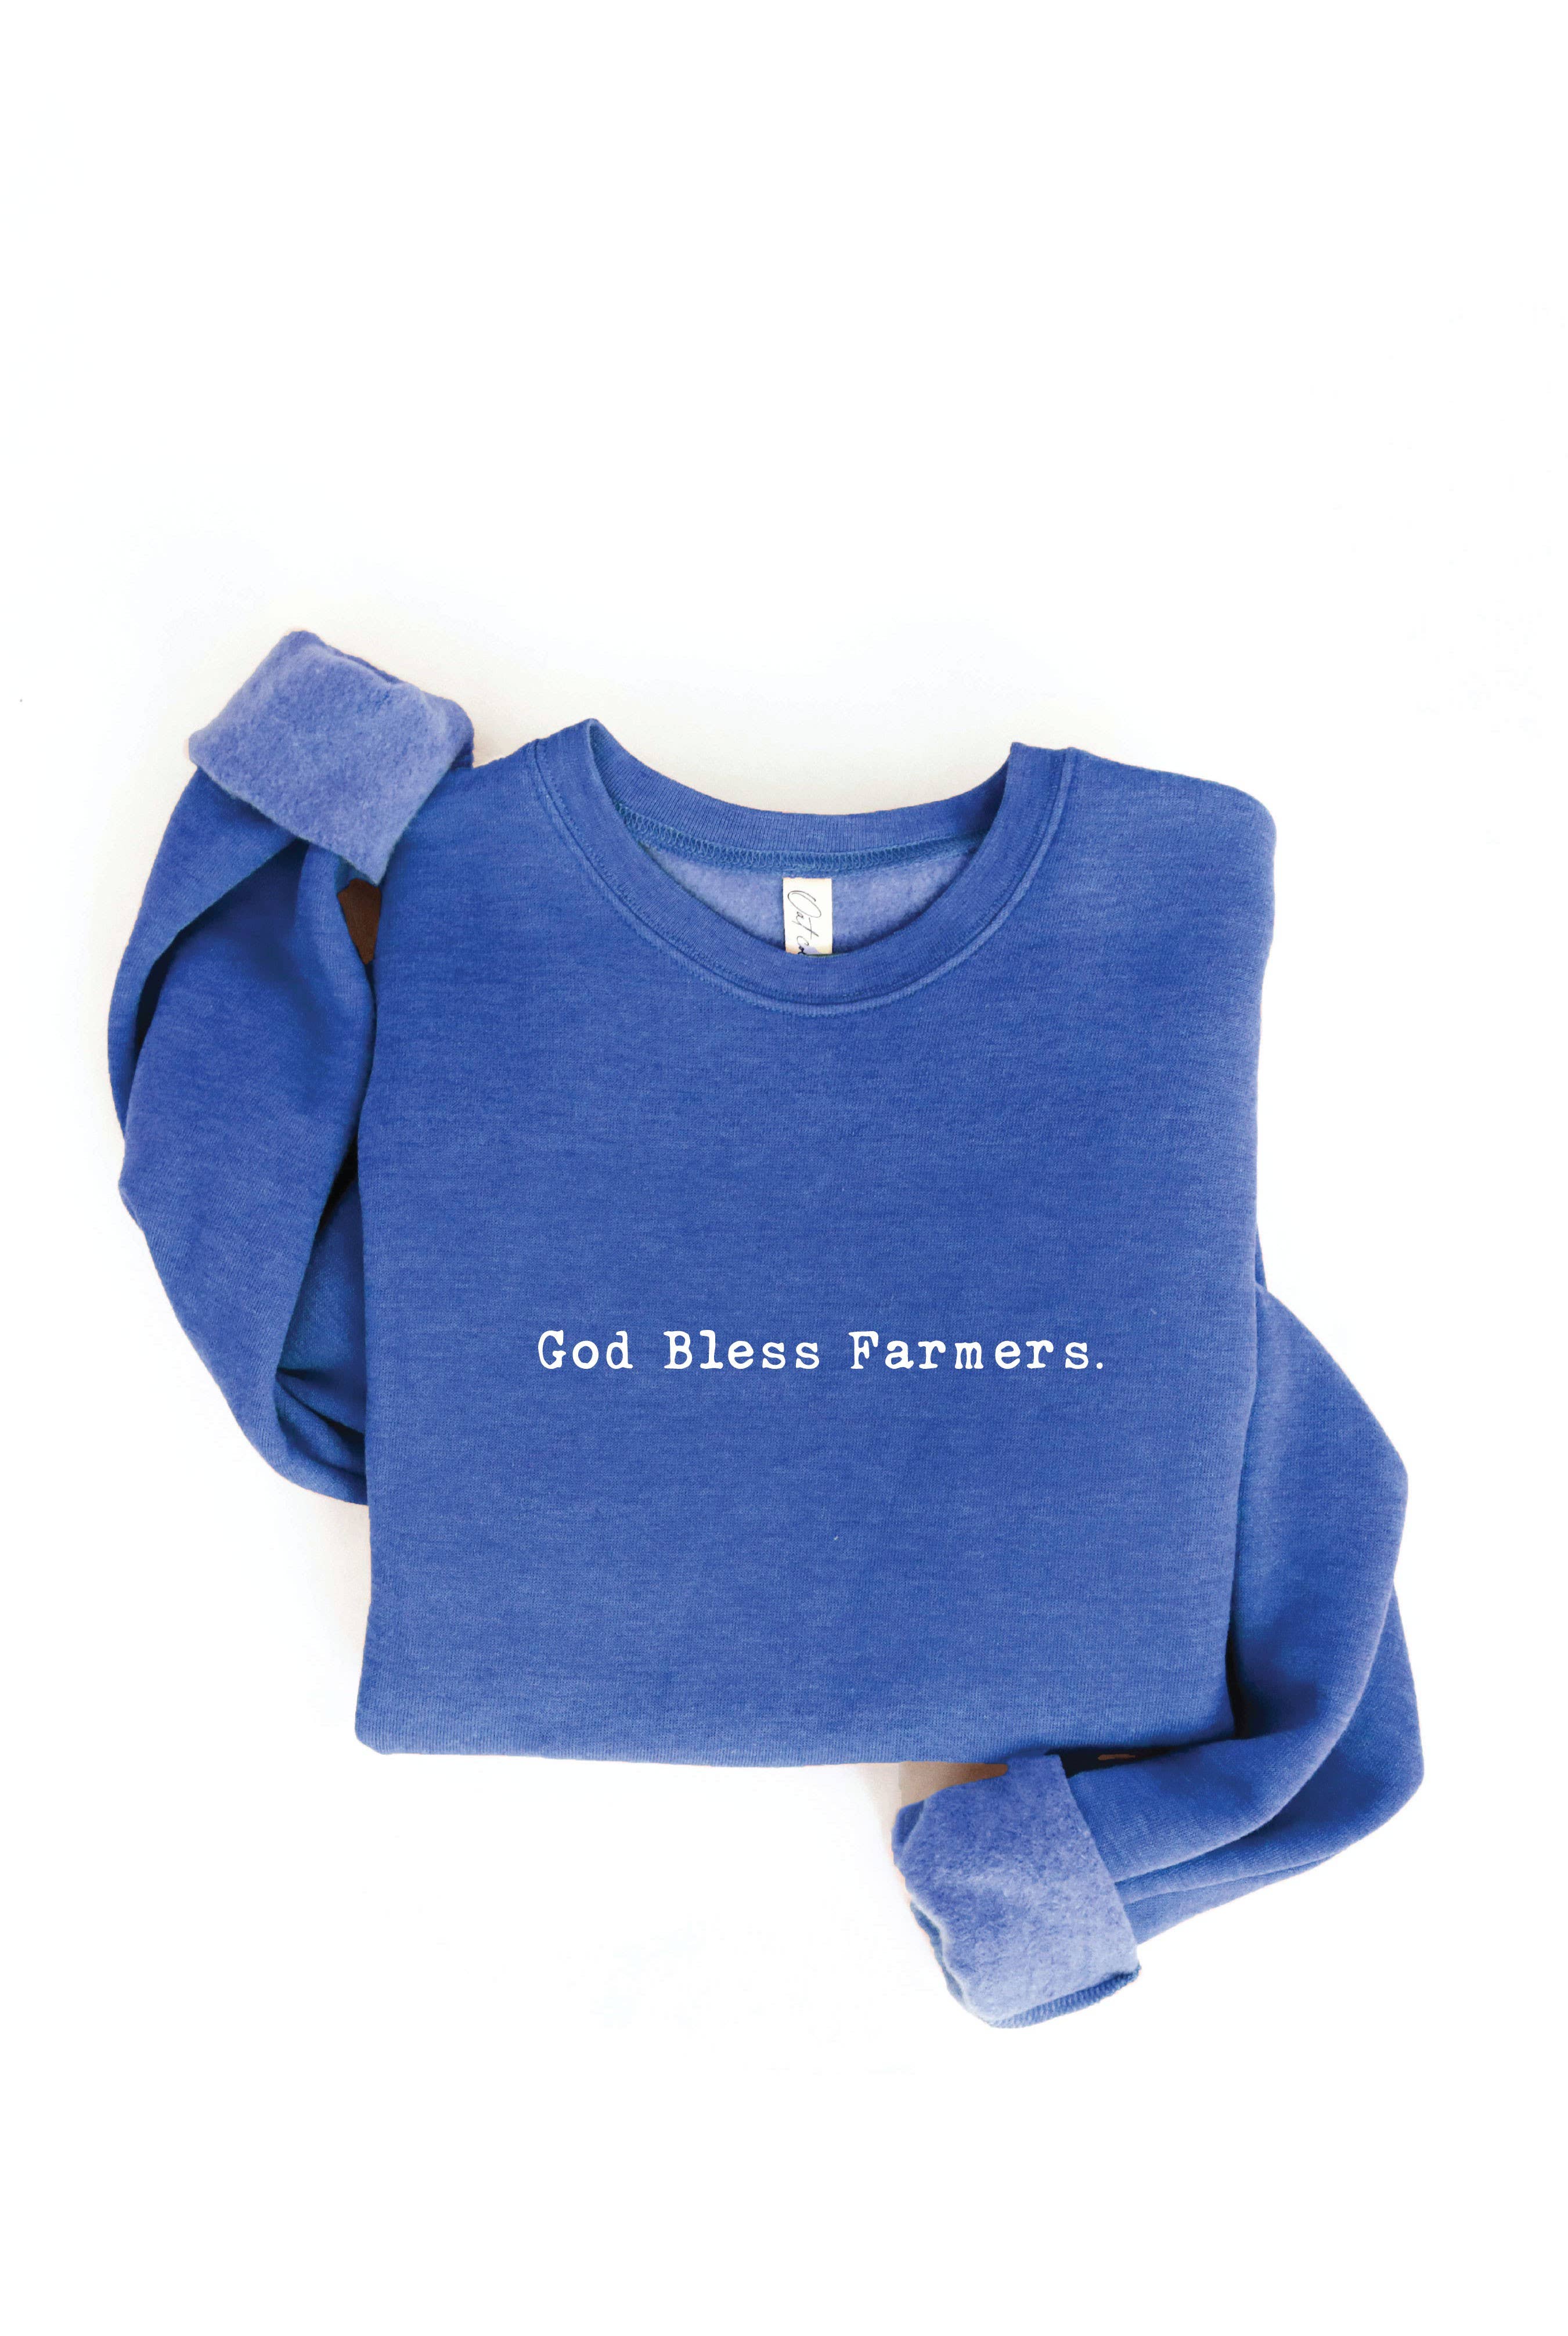 GOD BLESS FARMERS. Graphic Sweatshirt: M / DARK H. SAGE